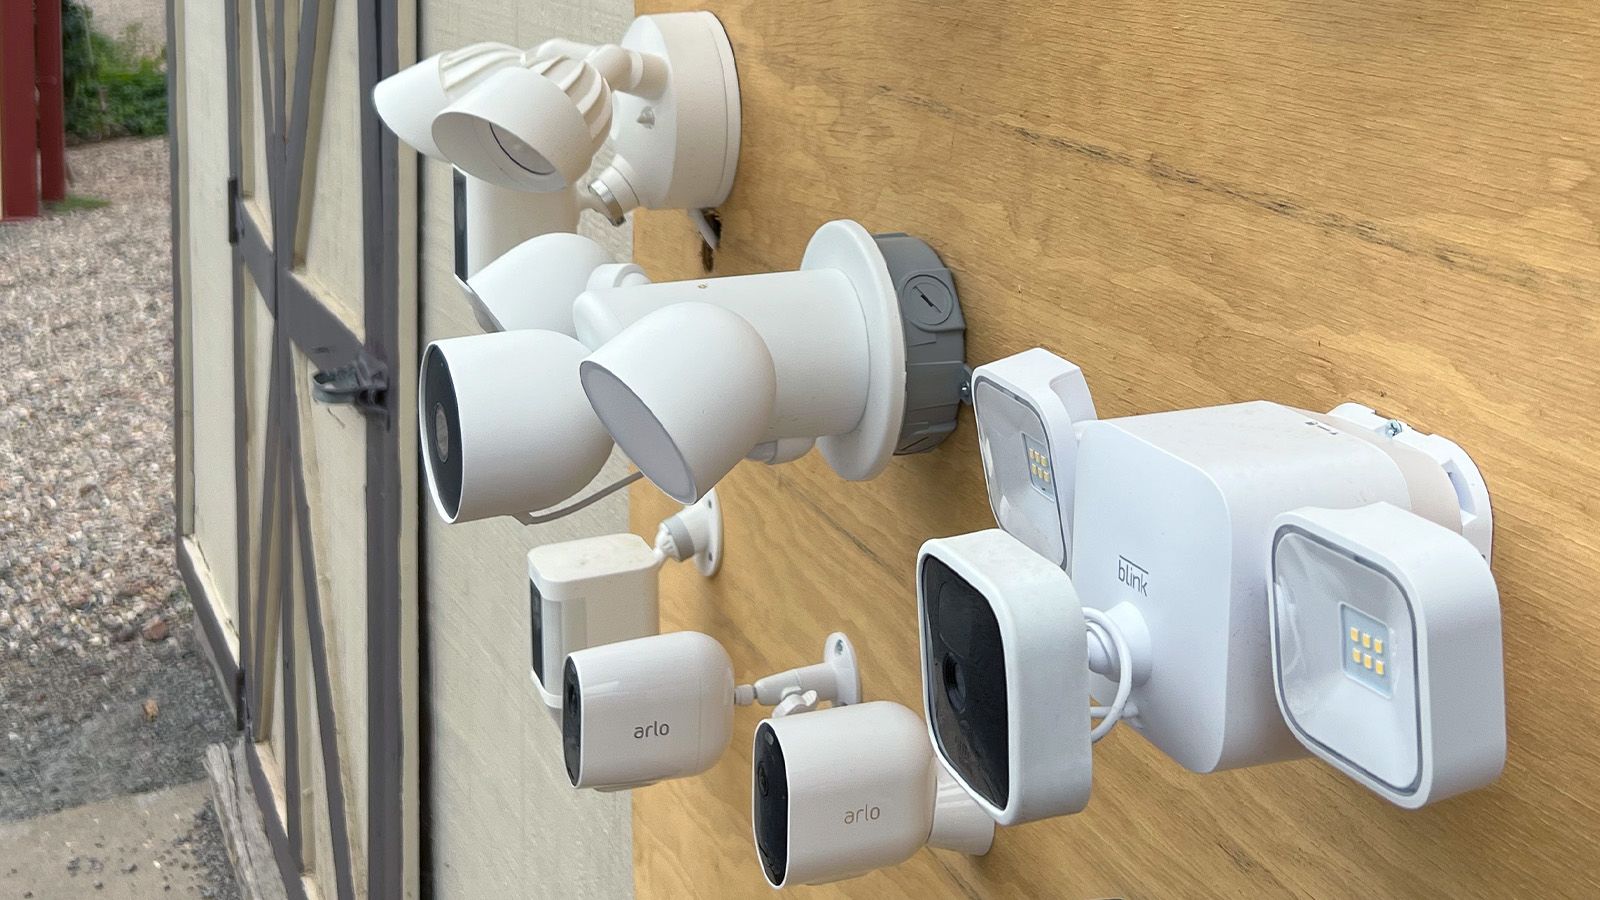 WIFI Spy Cam – Smart Store Direct